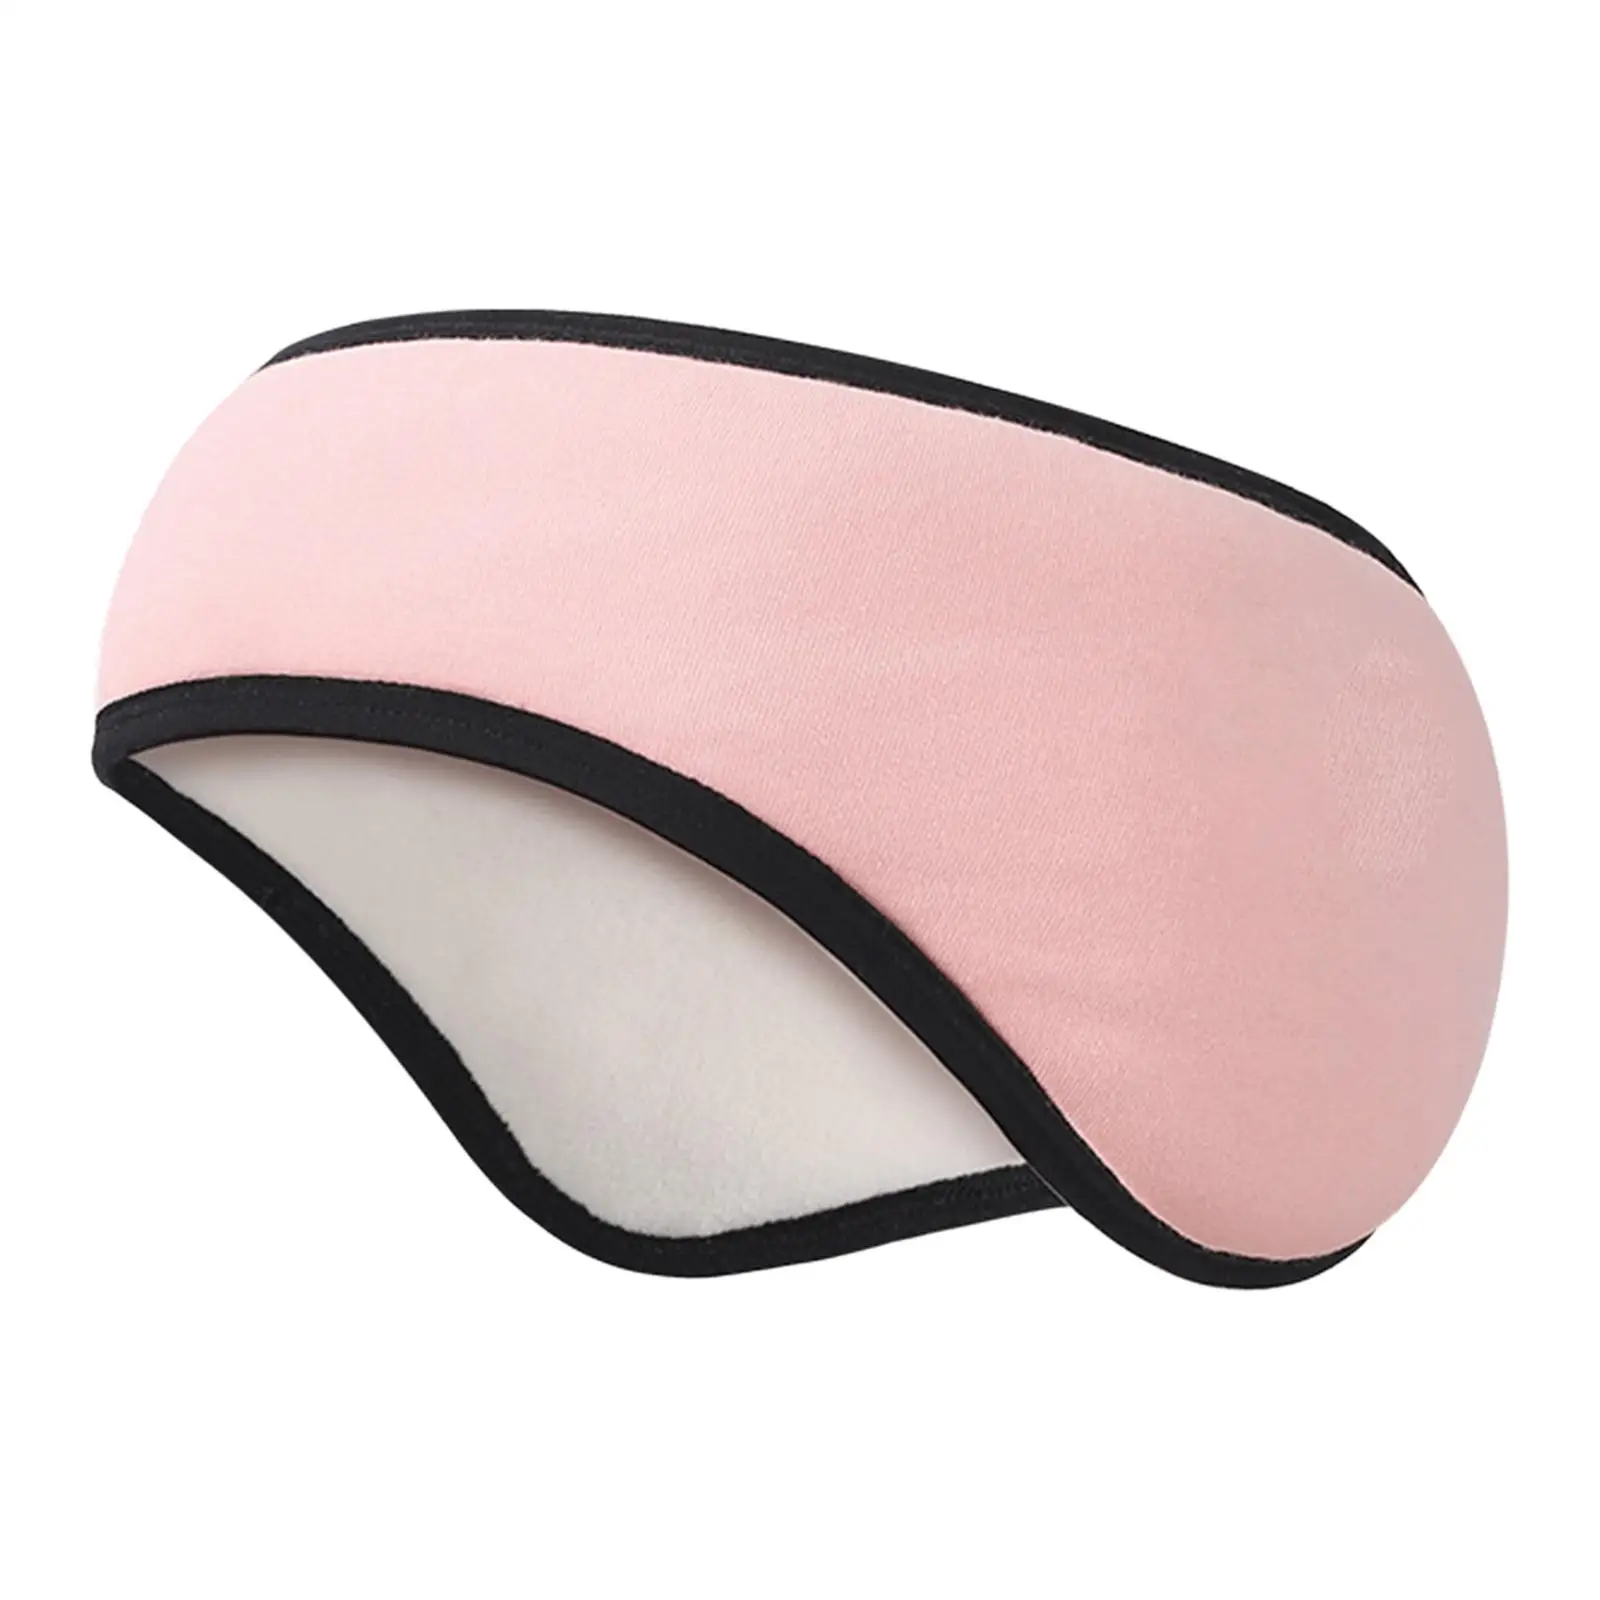 Winter Earmuffs for Women Ear Cover Ear Warmers Headband for Cycling Ski